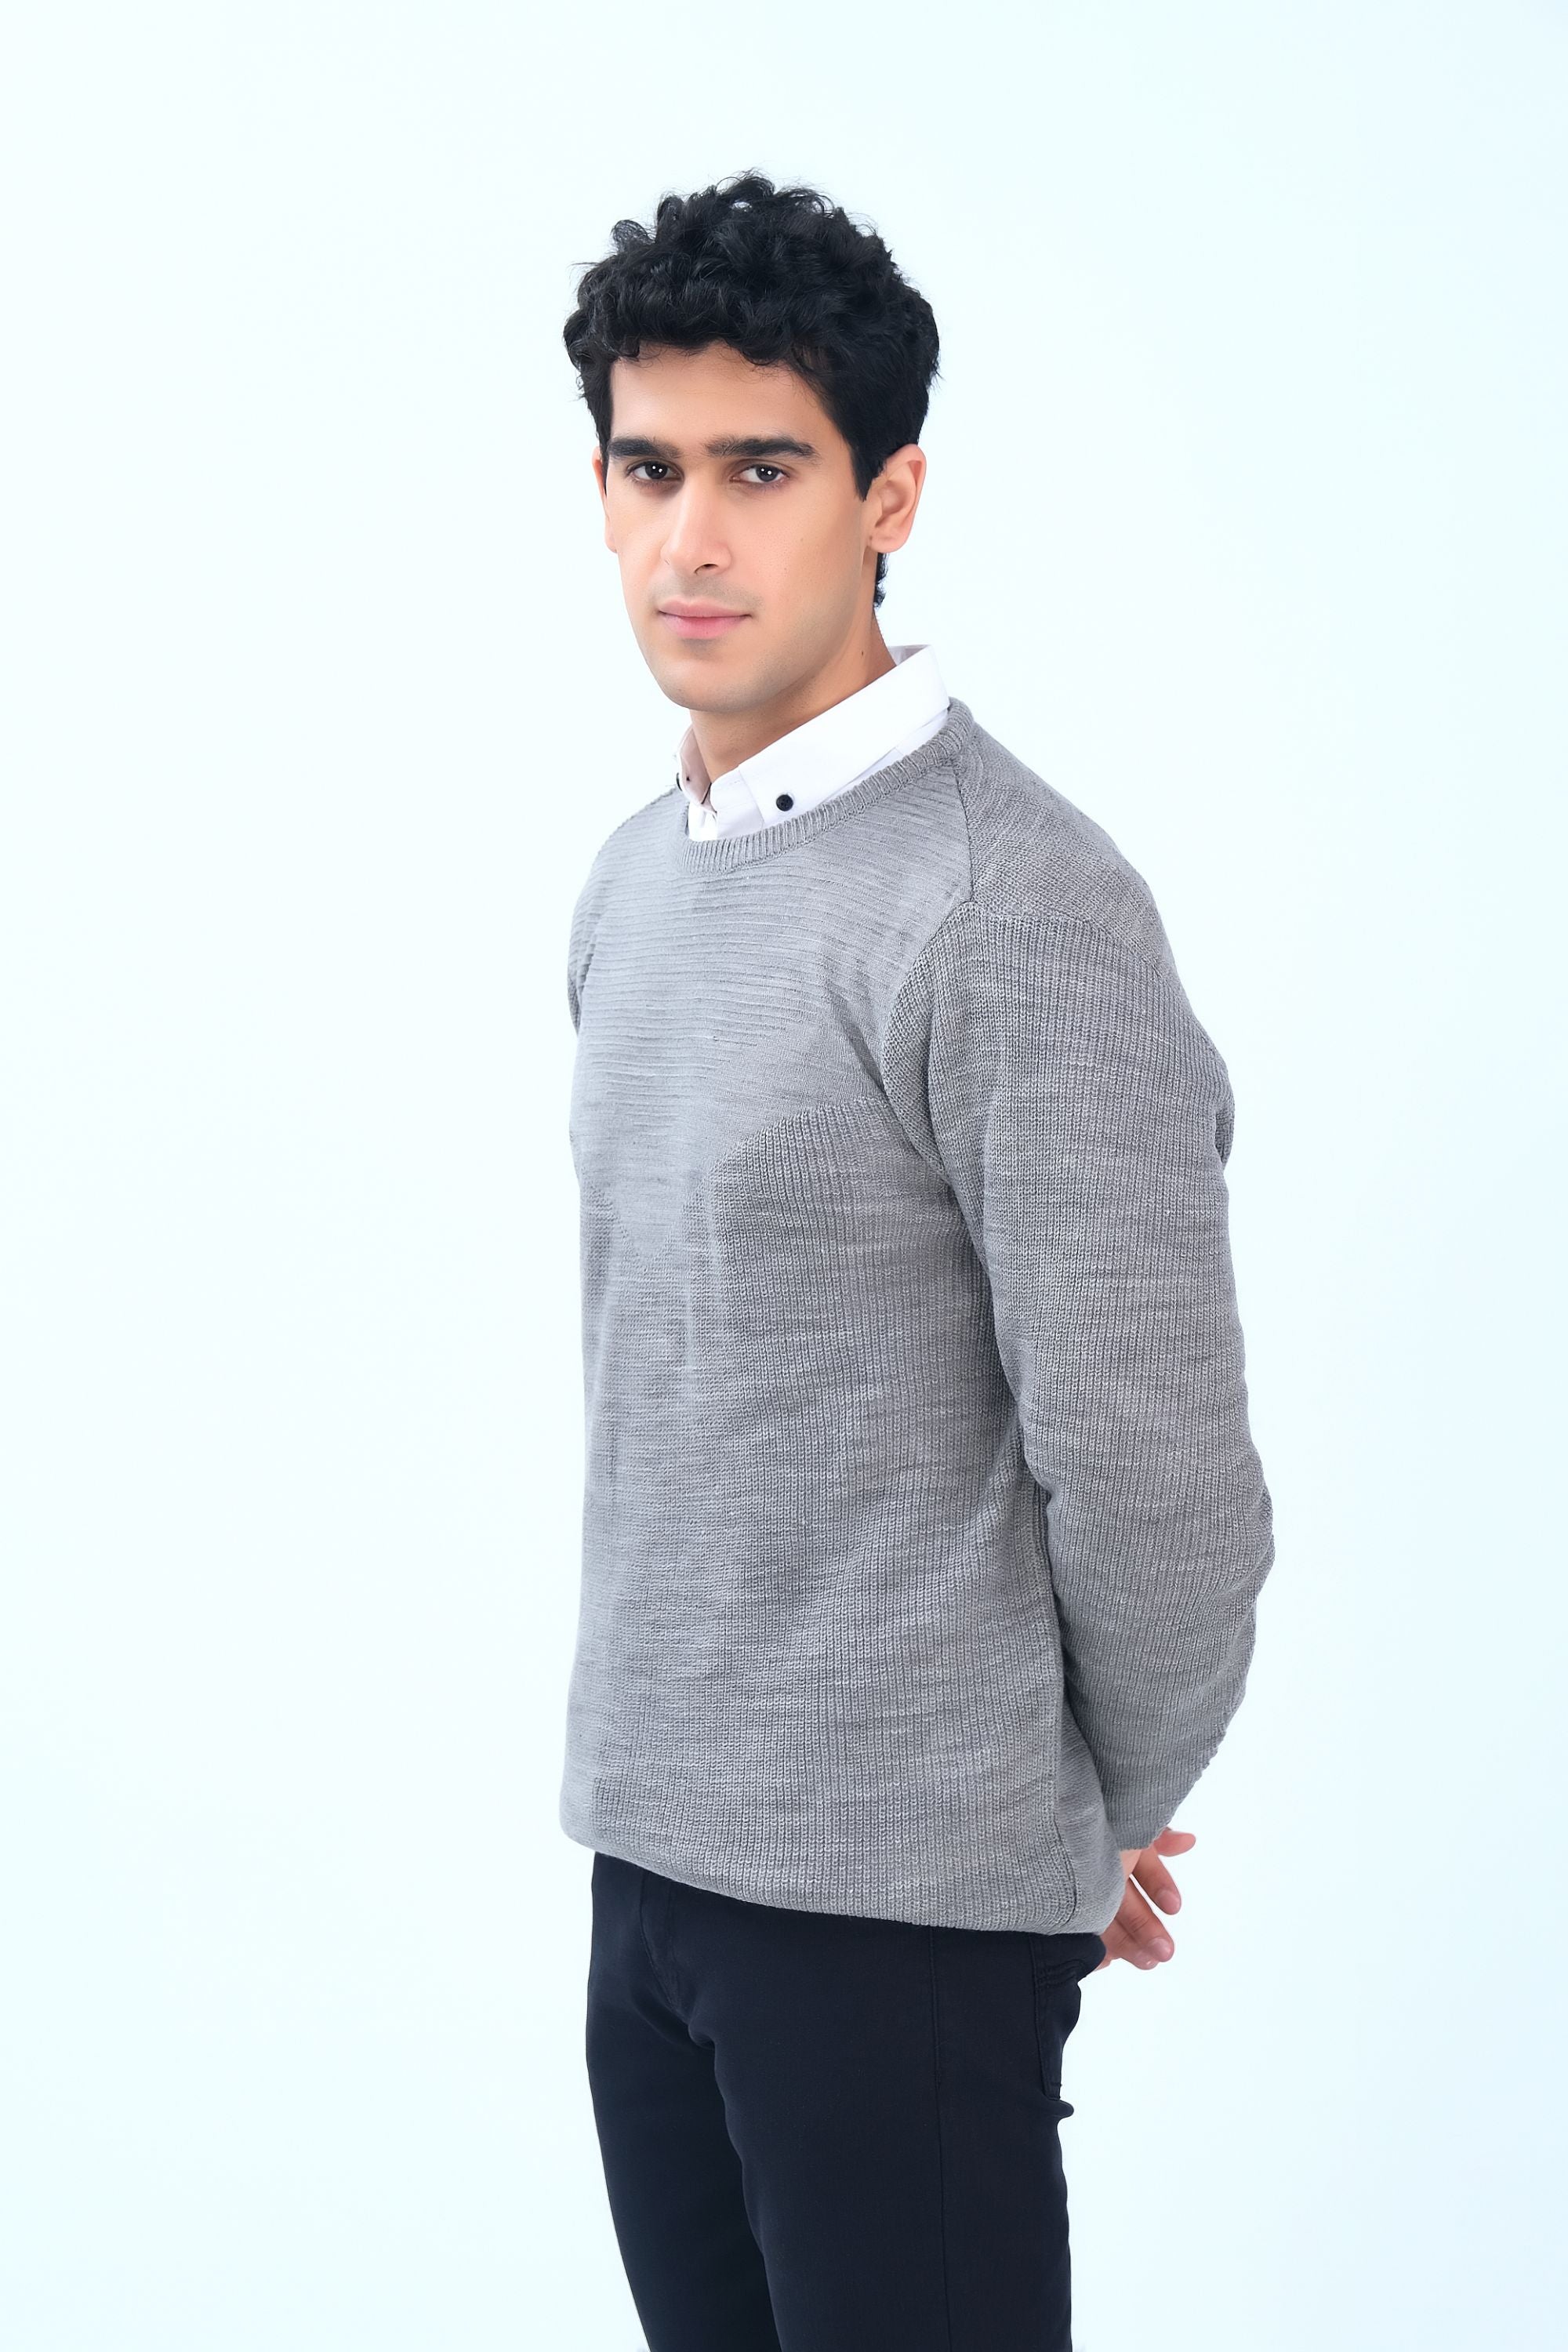 Smart Dark Grey Sweater